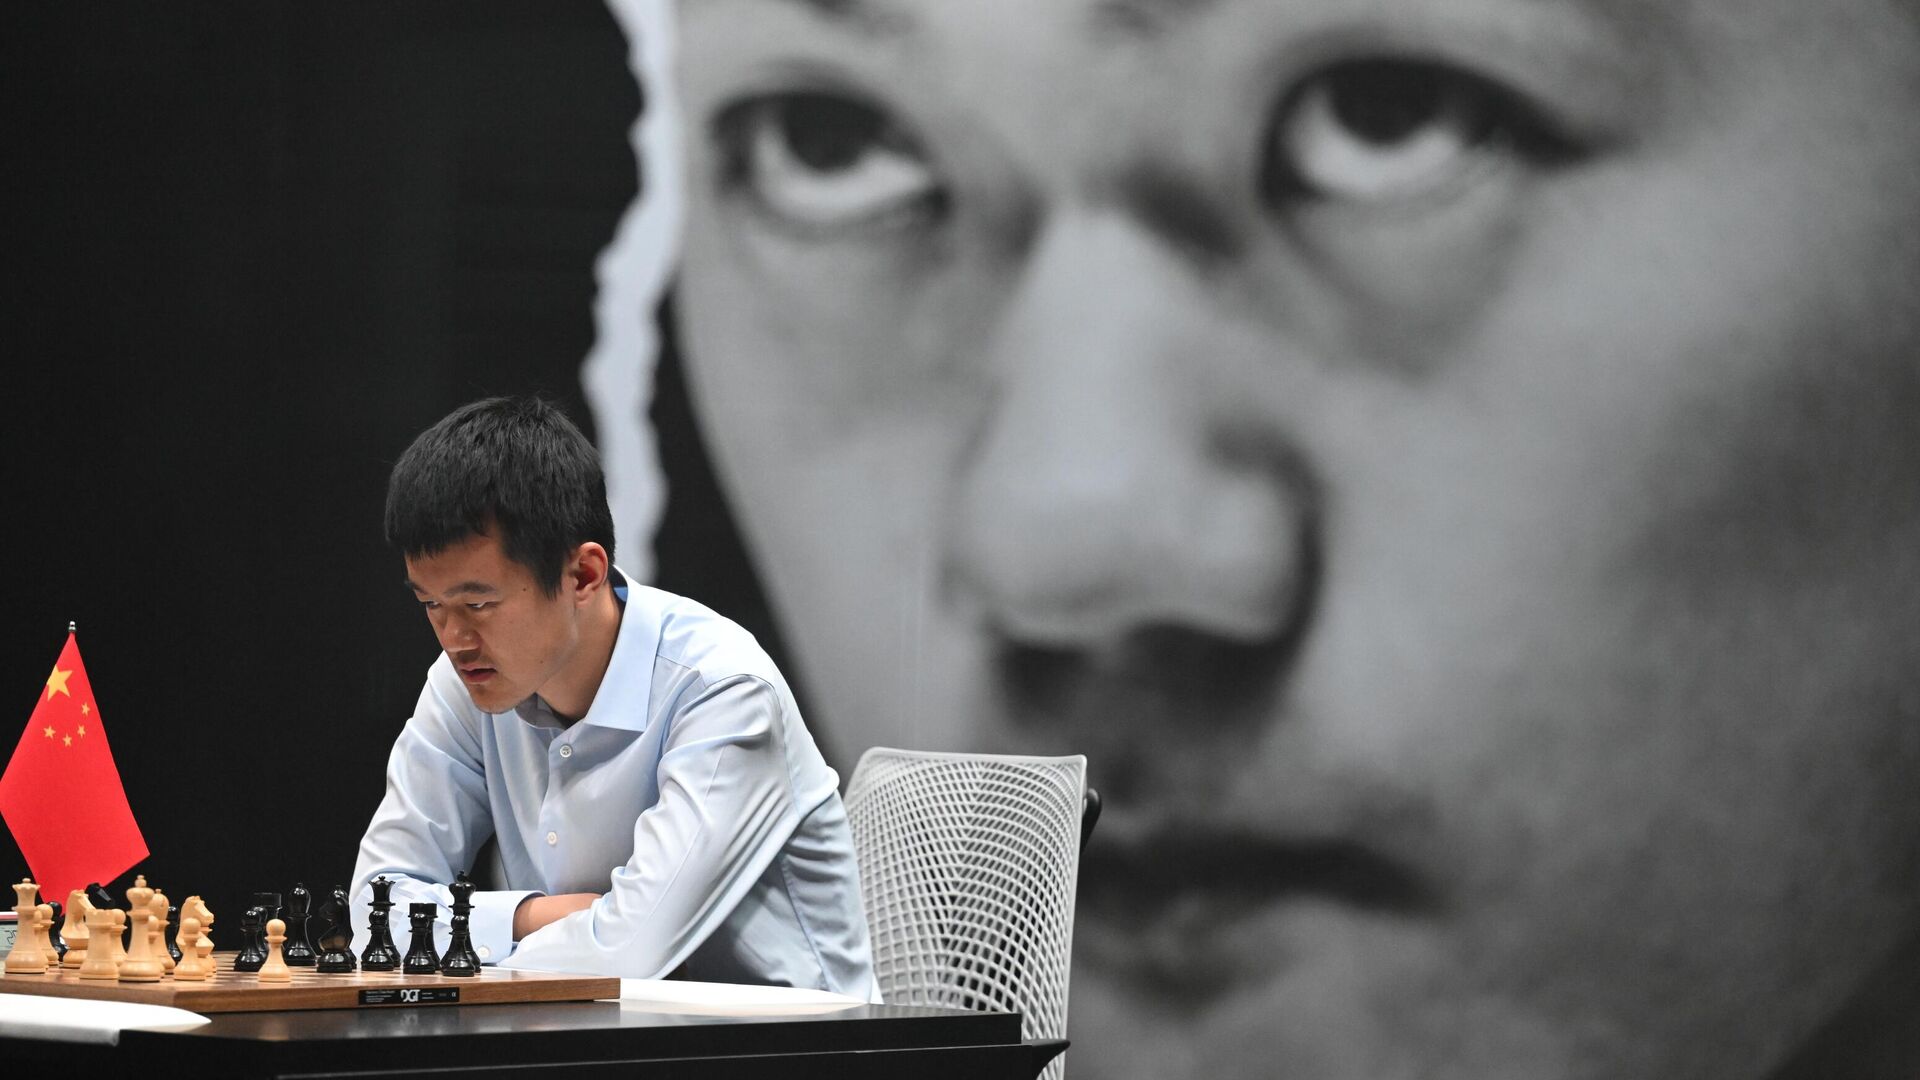 Ding Liren China's First World Chess Champion